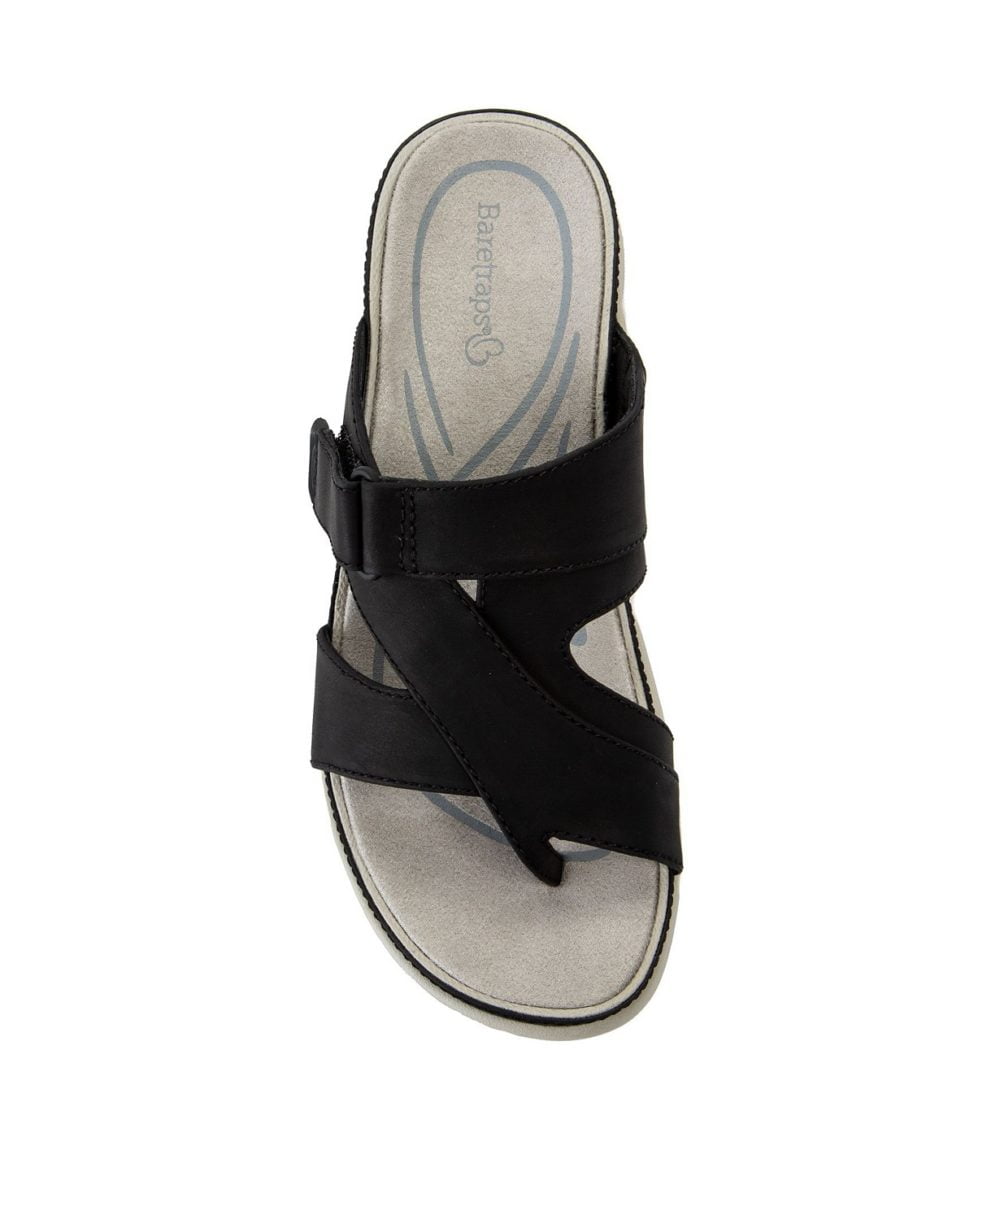 www.couturepoint.com-baretraps-womens-black-nalani-casual-comfort-slide-sandals